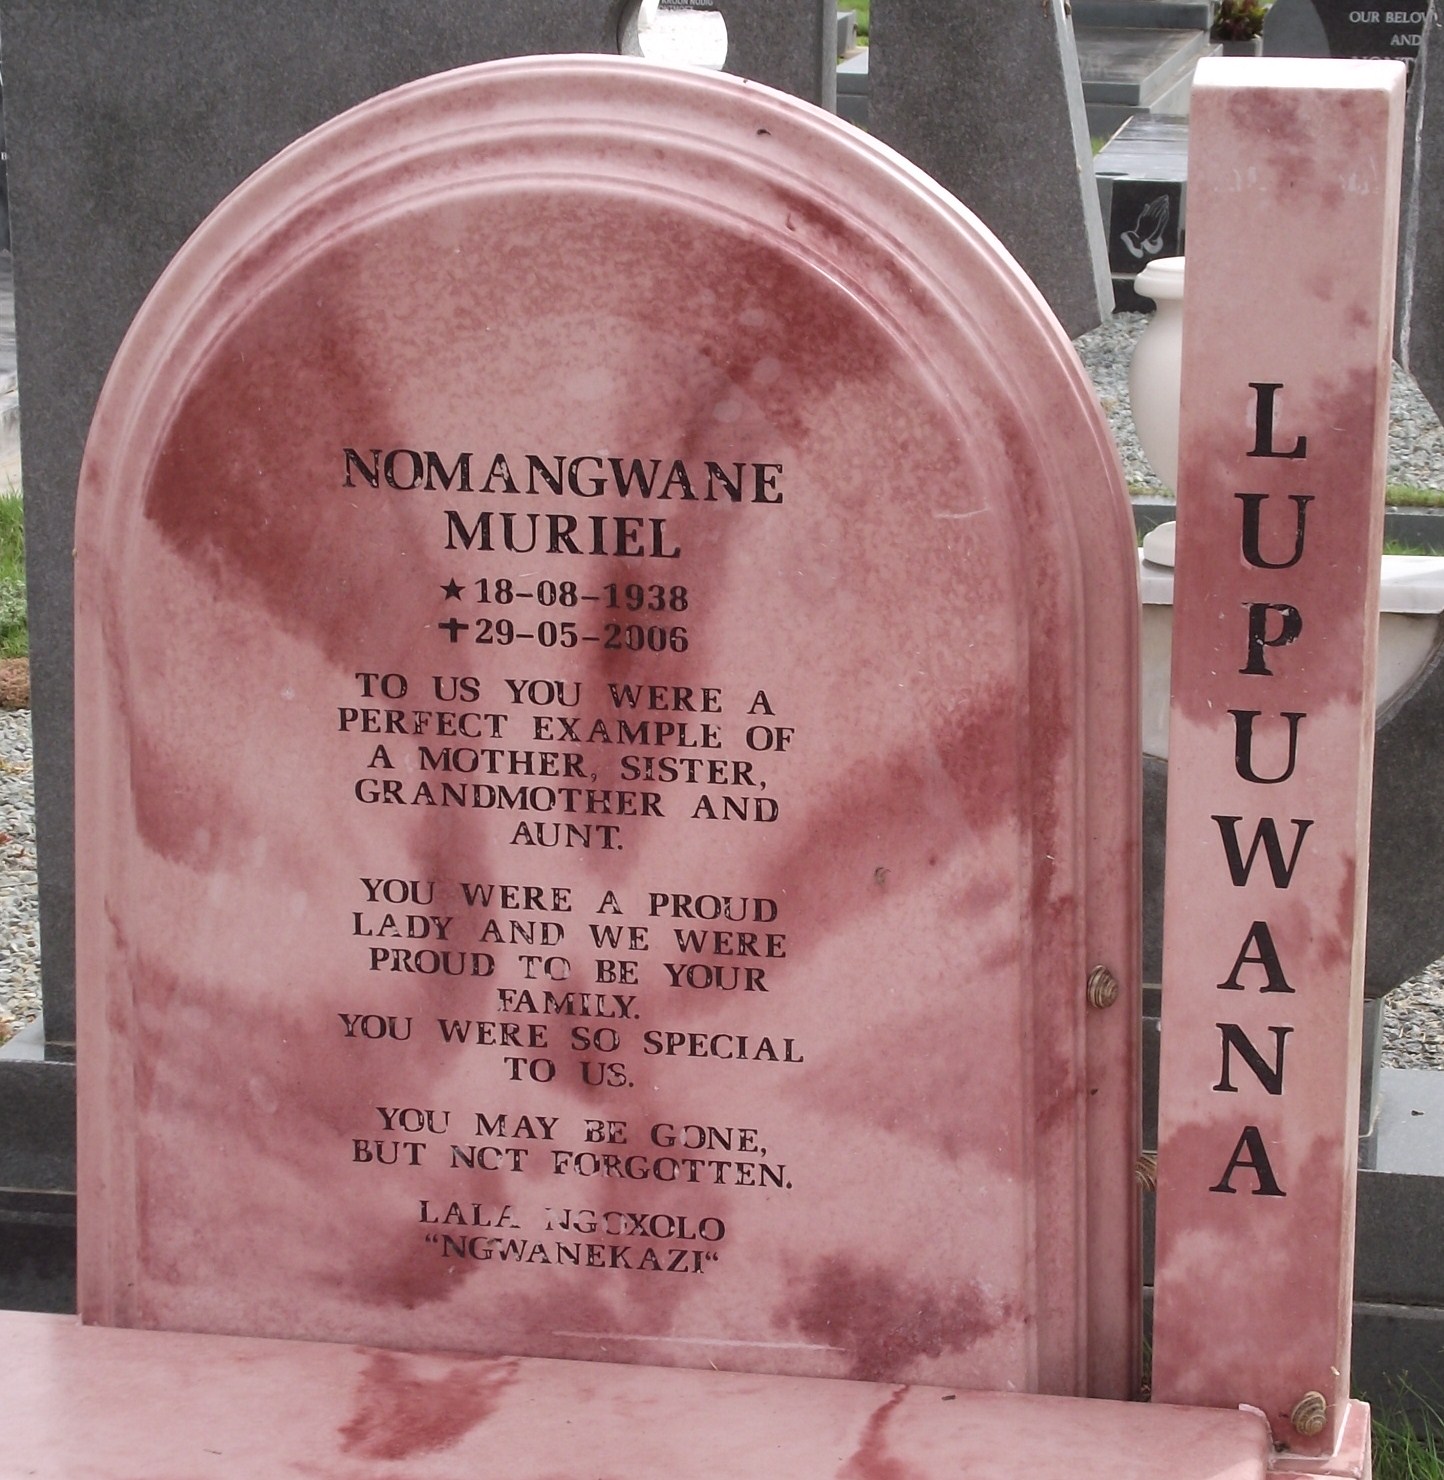 LUPUWANA Nomangwana Muriel 1938-2006